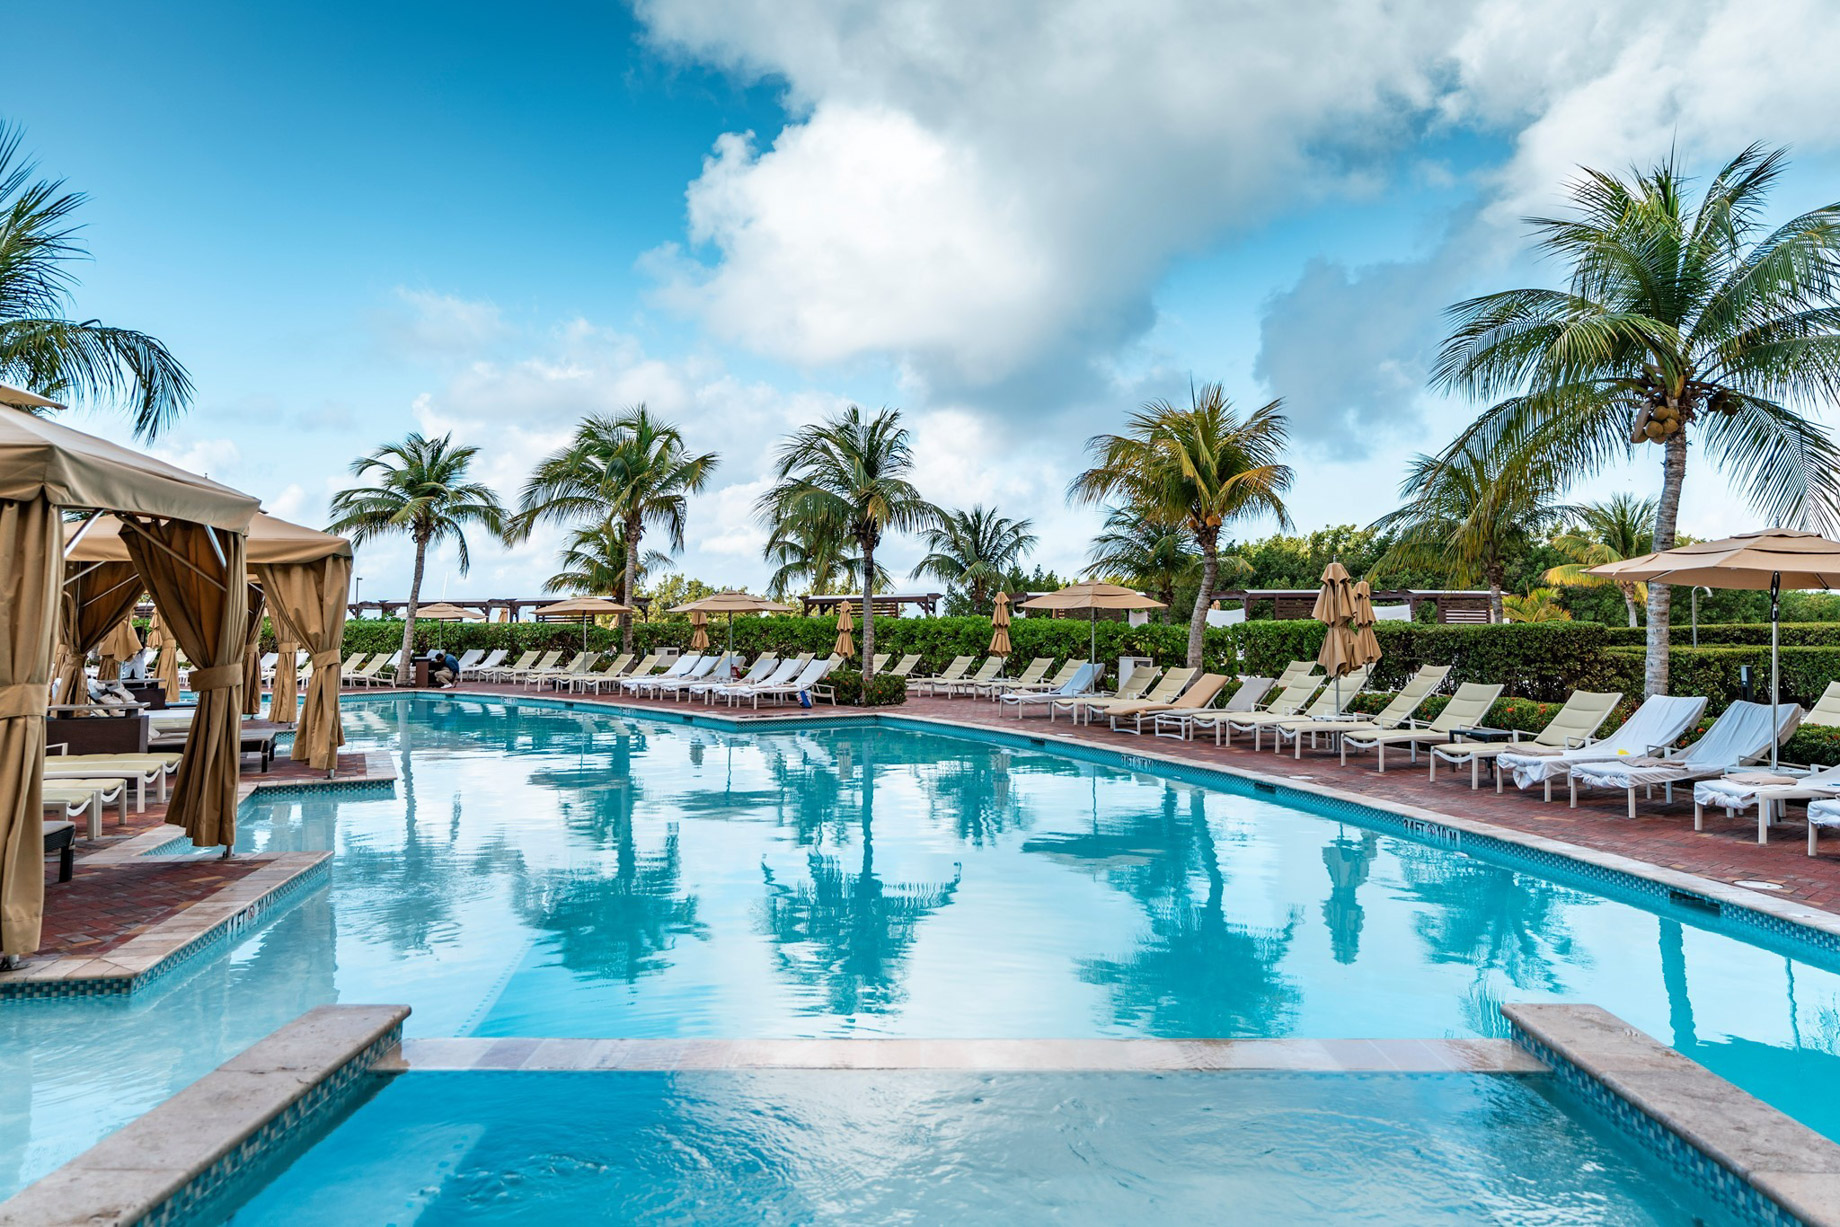 The Ritz-Carlton, Aruba Resort - Palm Beach, Aruba - Outdoor Pool